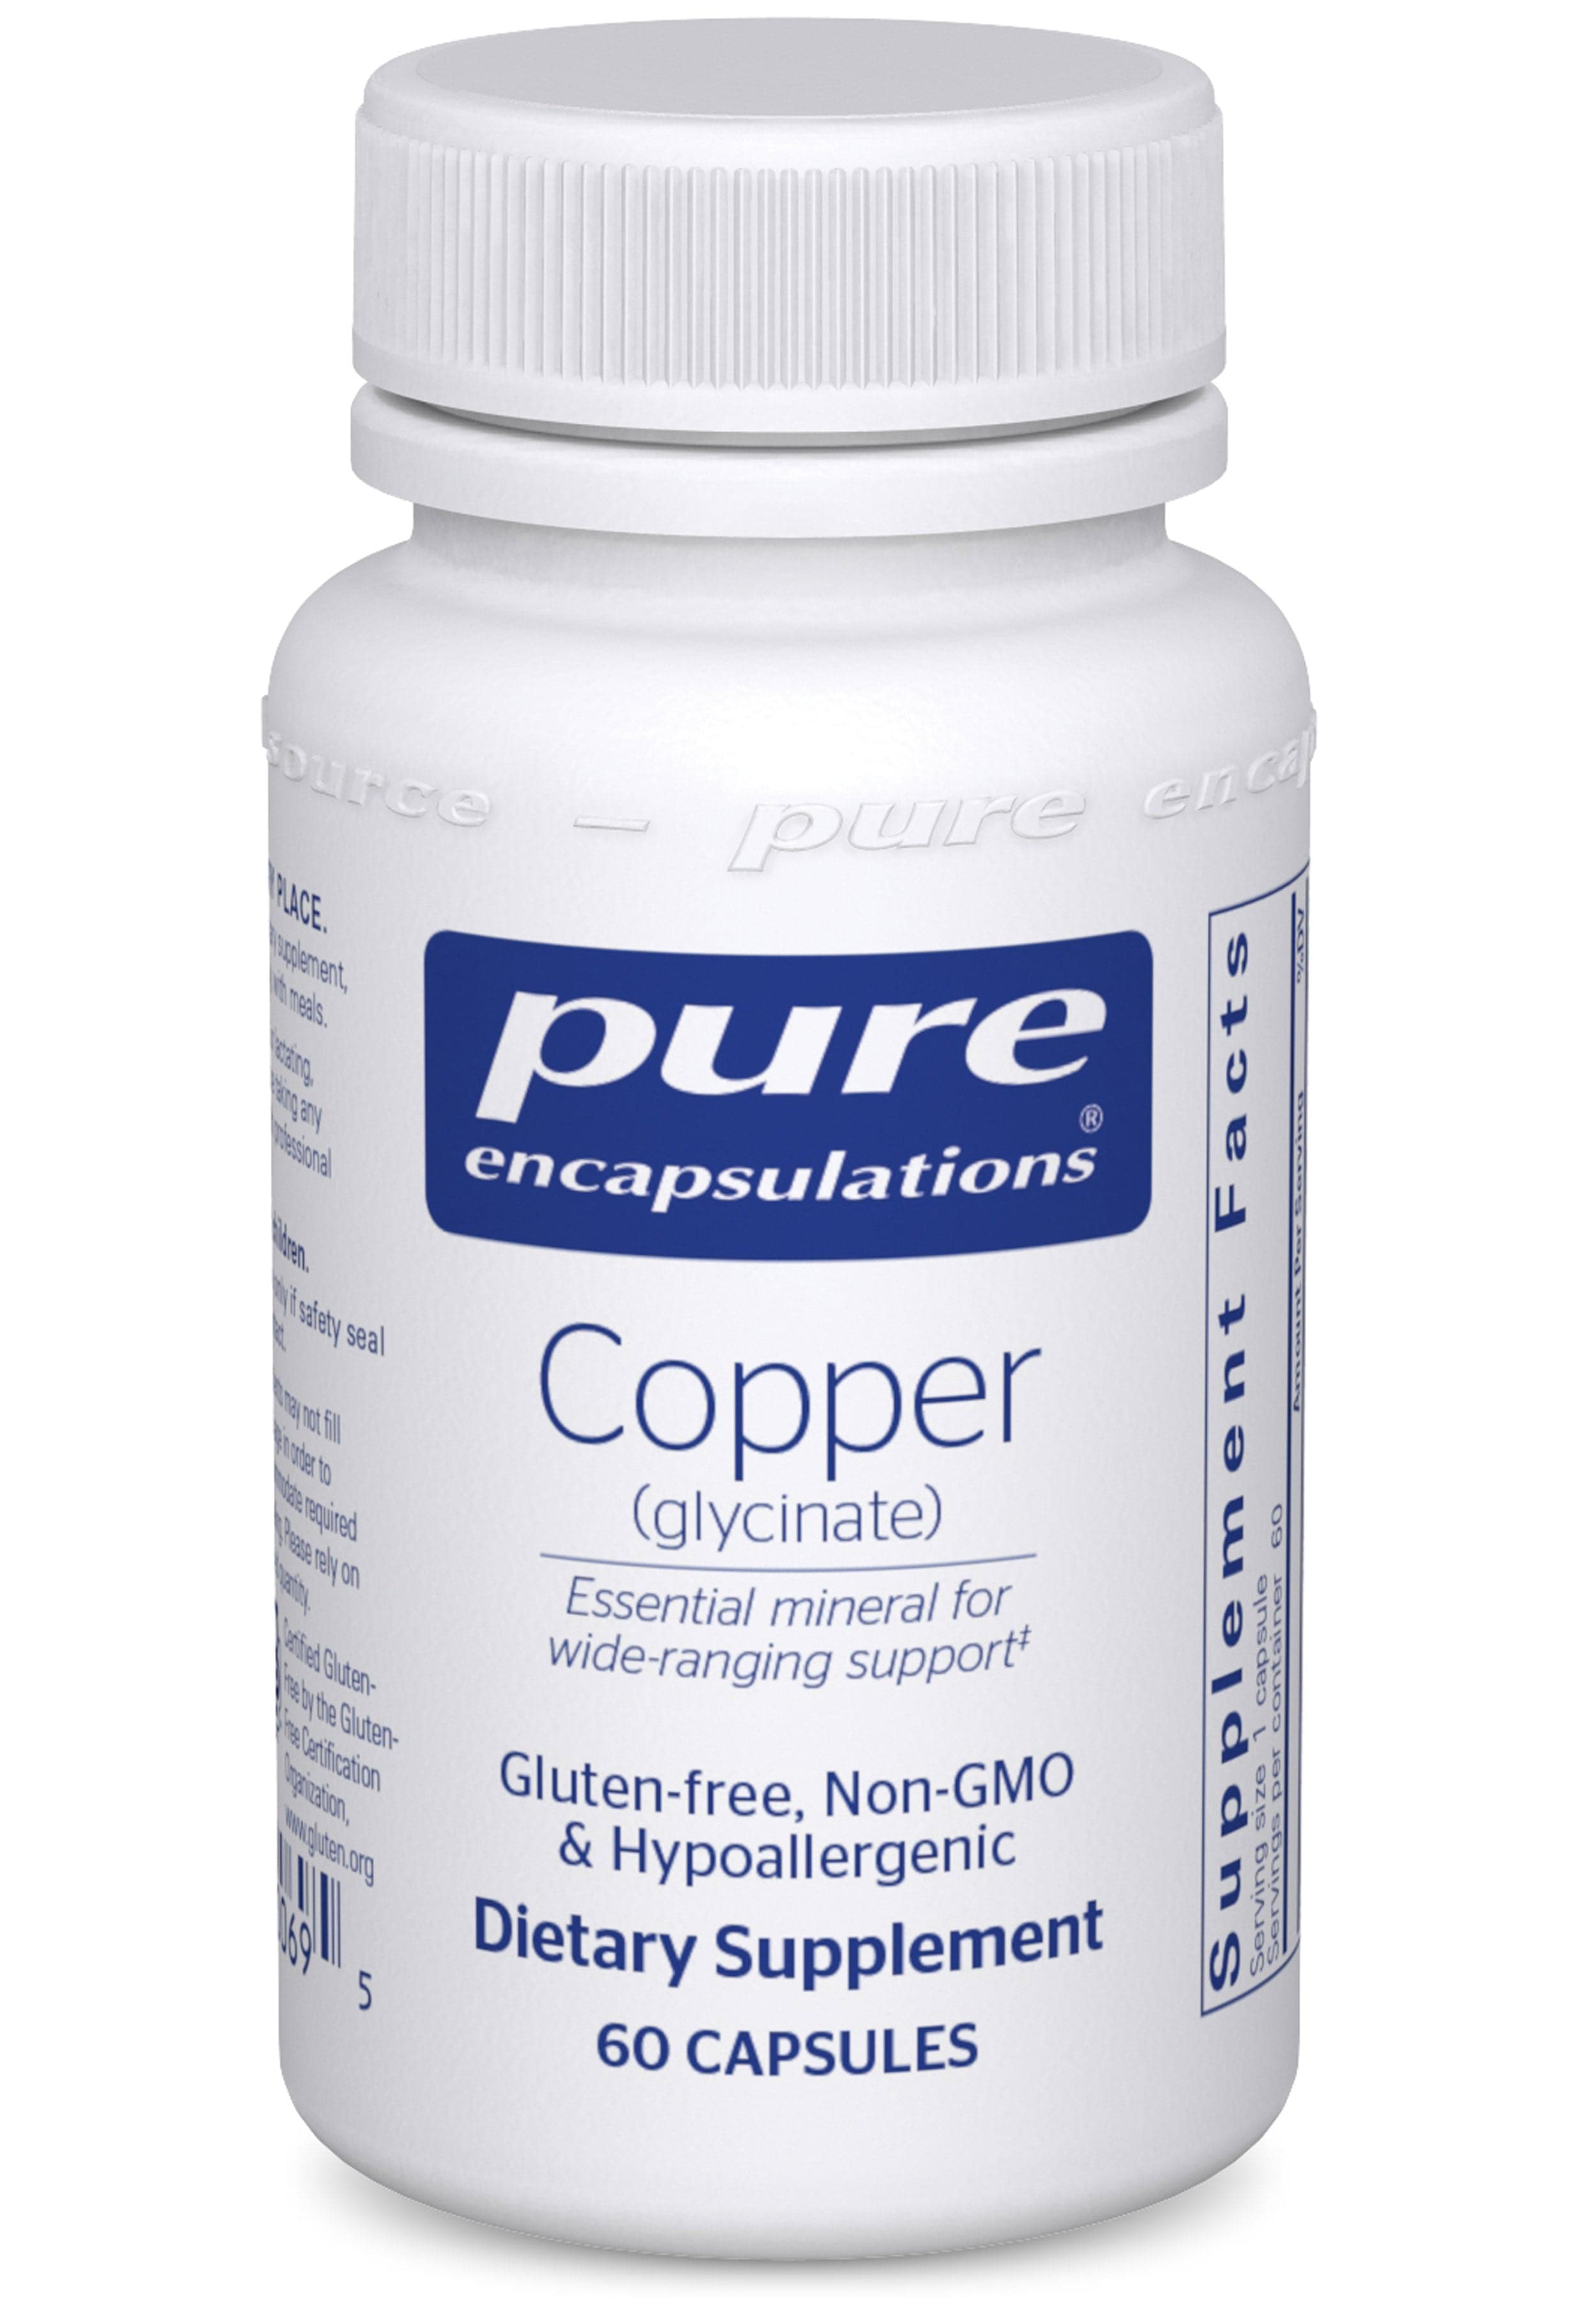 Pure Encapsulations Copper (glycinate)